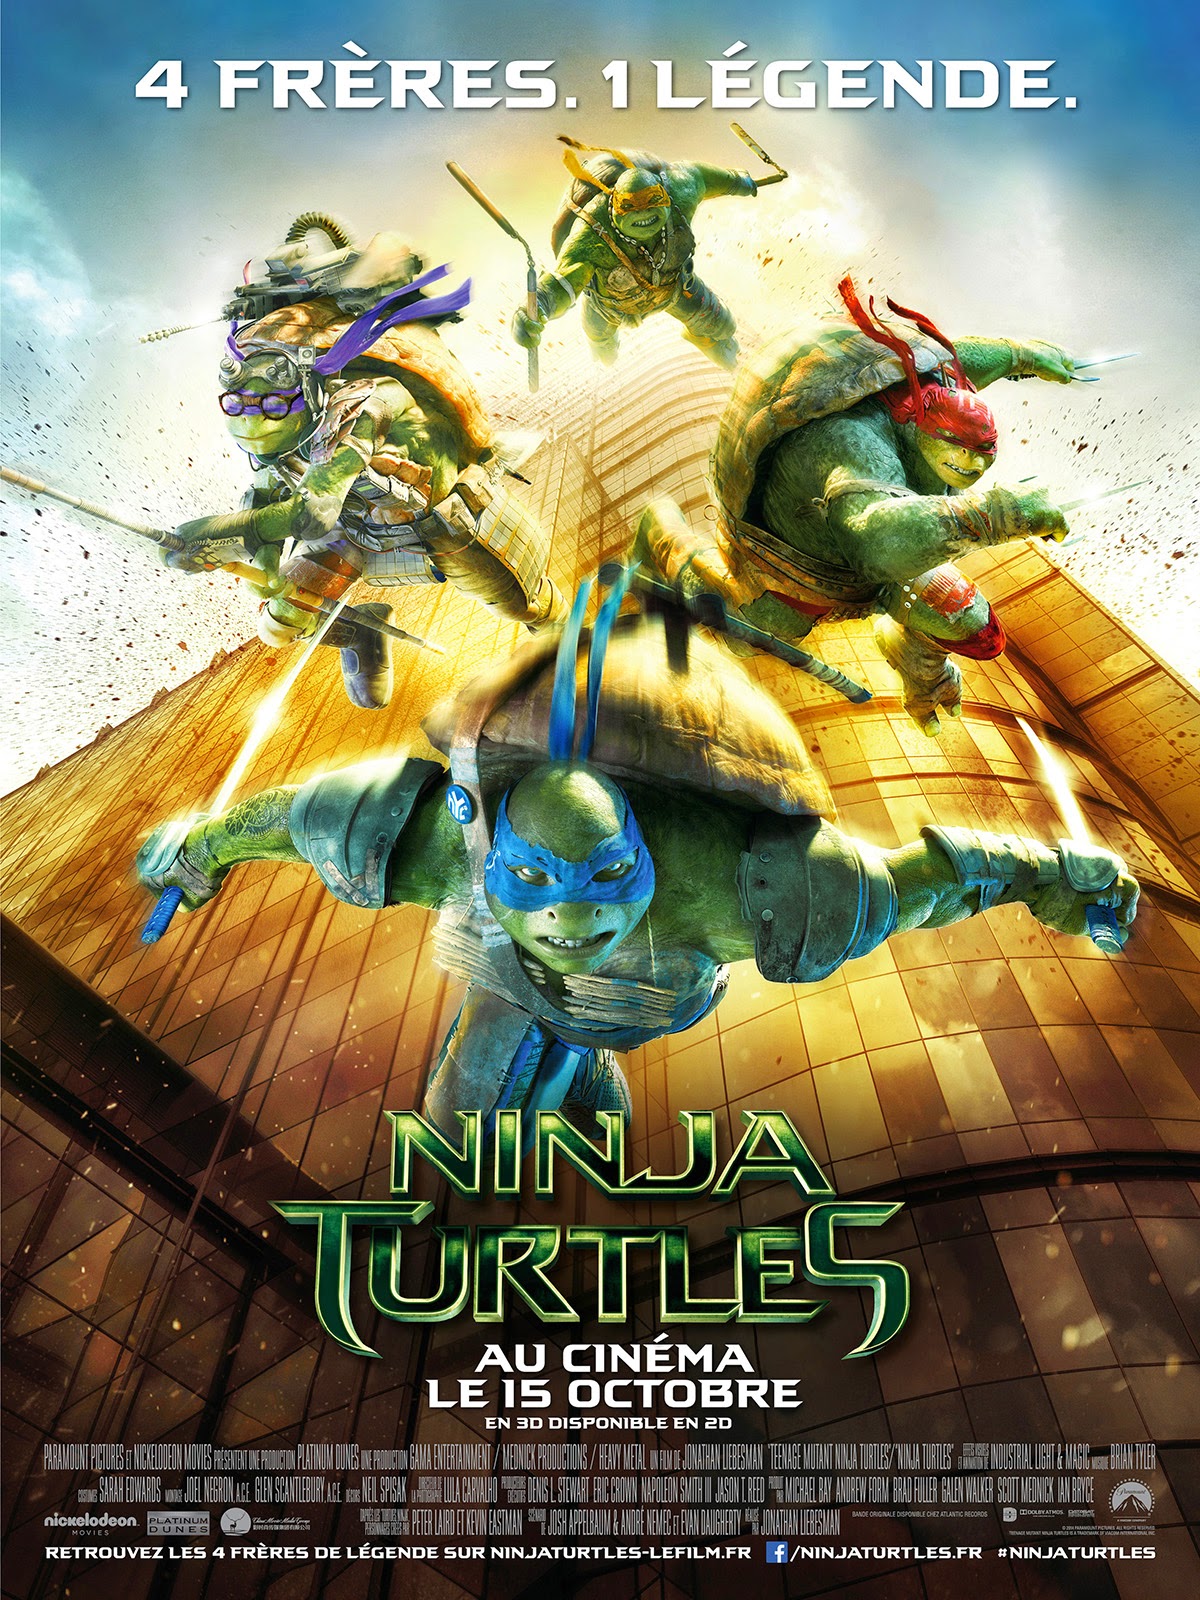 http://fuckingcinephiles.blogspot.fr/2014/10/critique-ninja-turtles.html